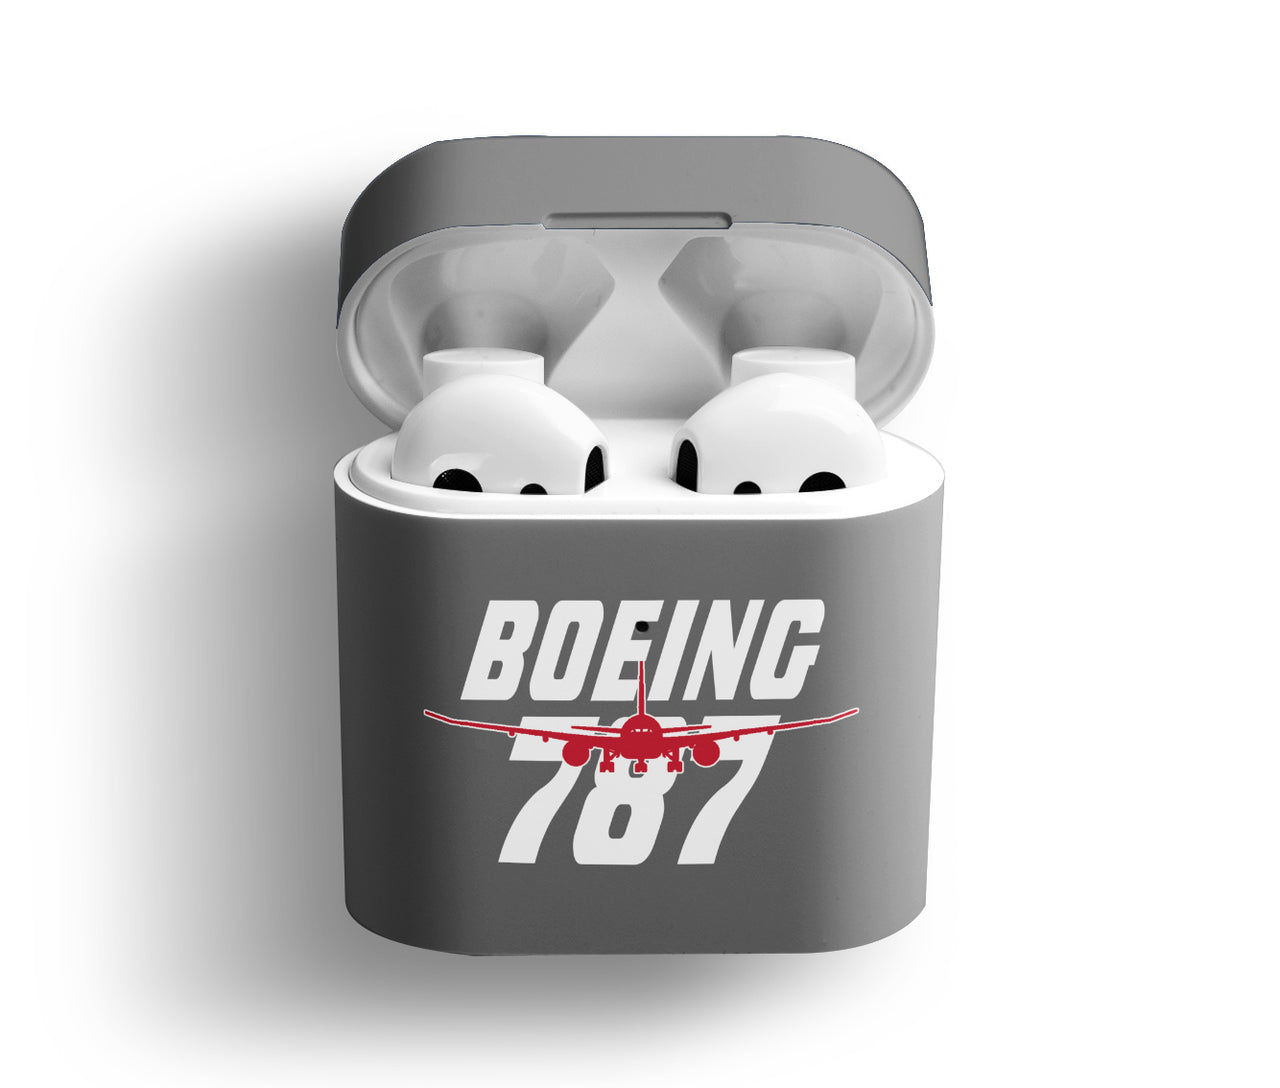 Amazing Boeing 787 Designed AirPods Cases